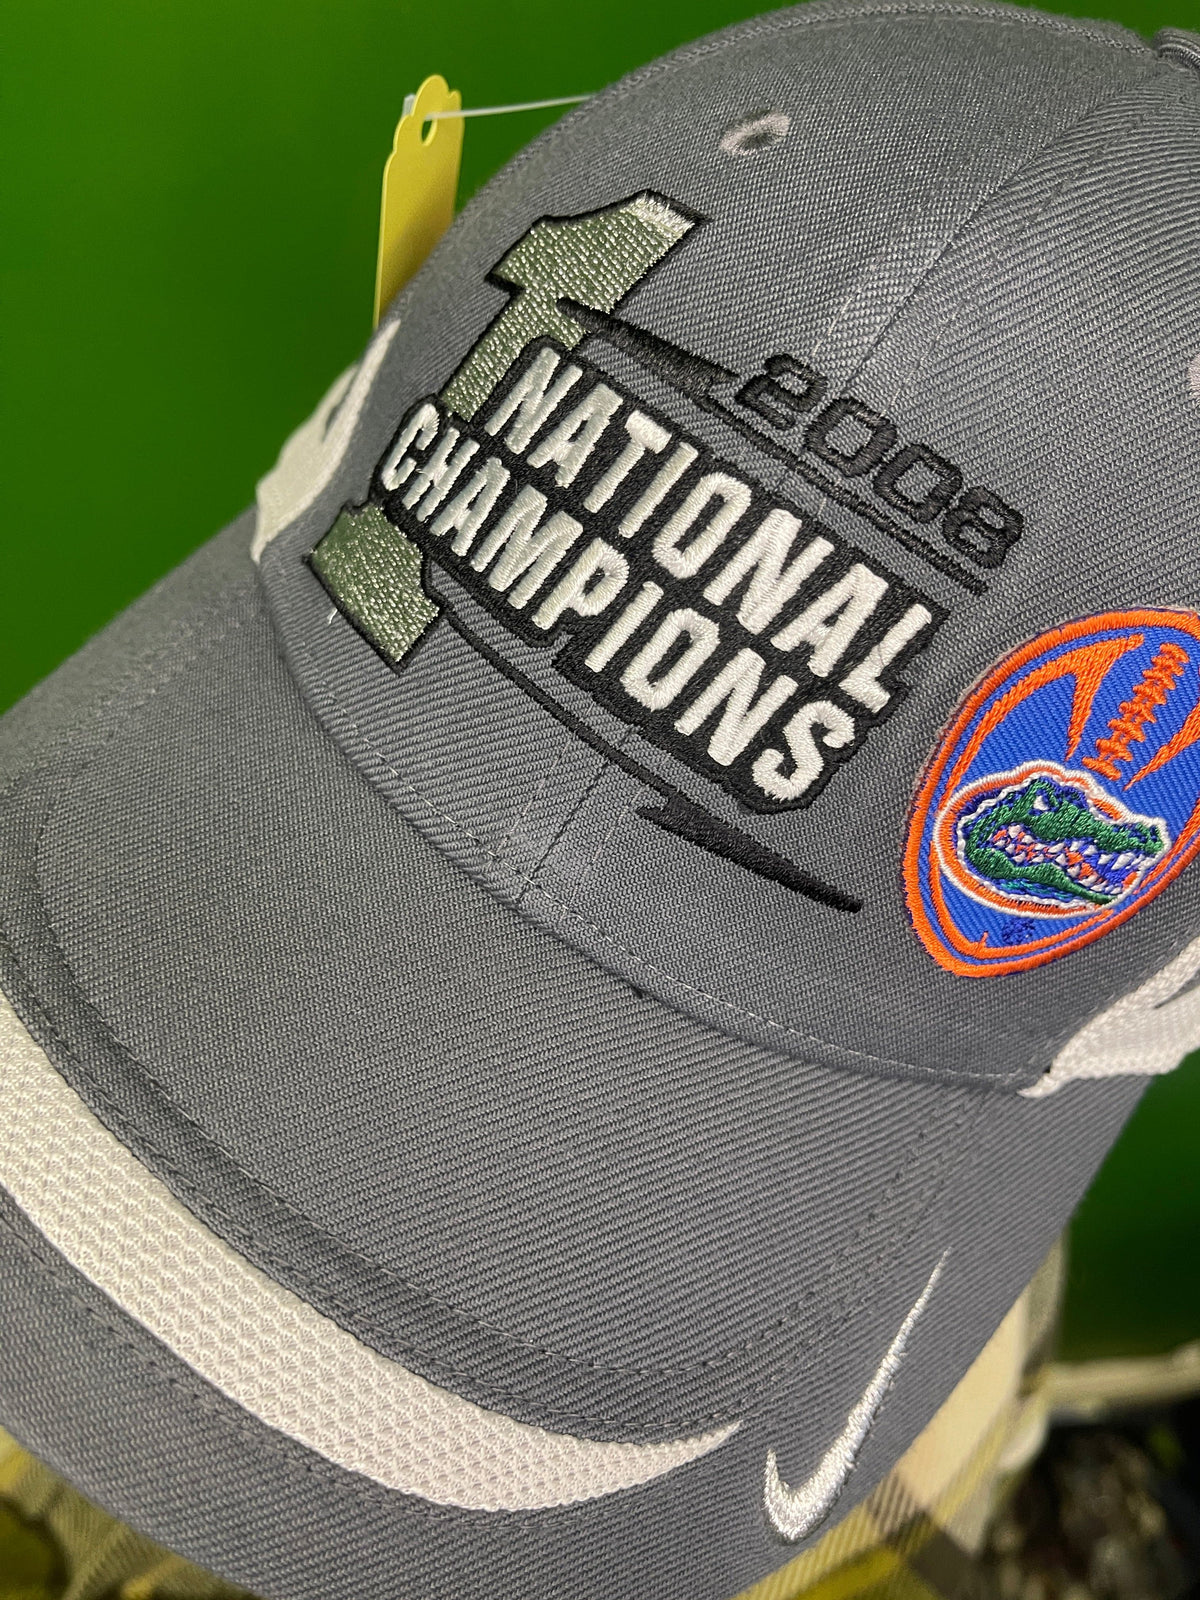 NCAA Florida Gators 2008 National Champions Sparkly Strapback Hat/Cap Women's OSFM